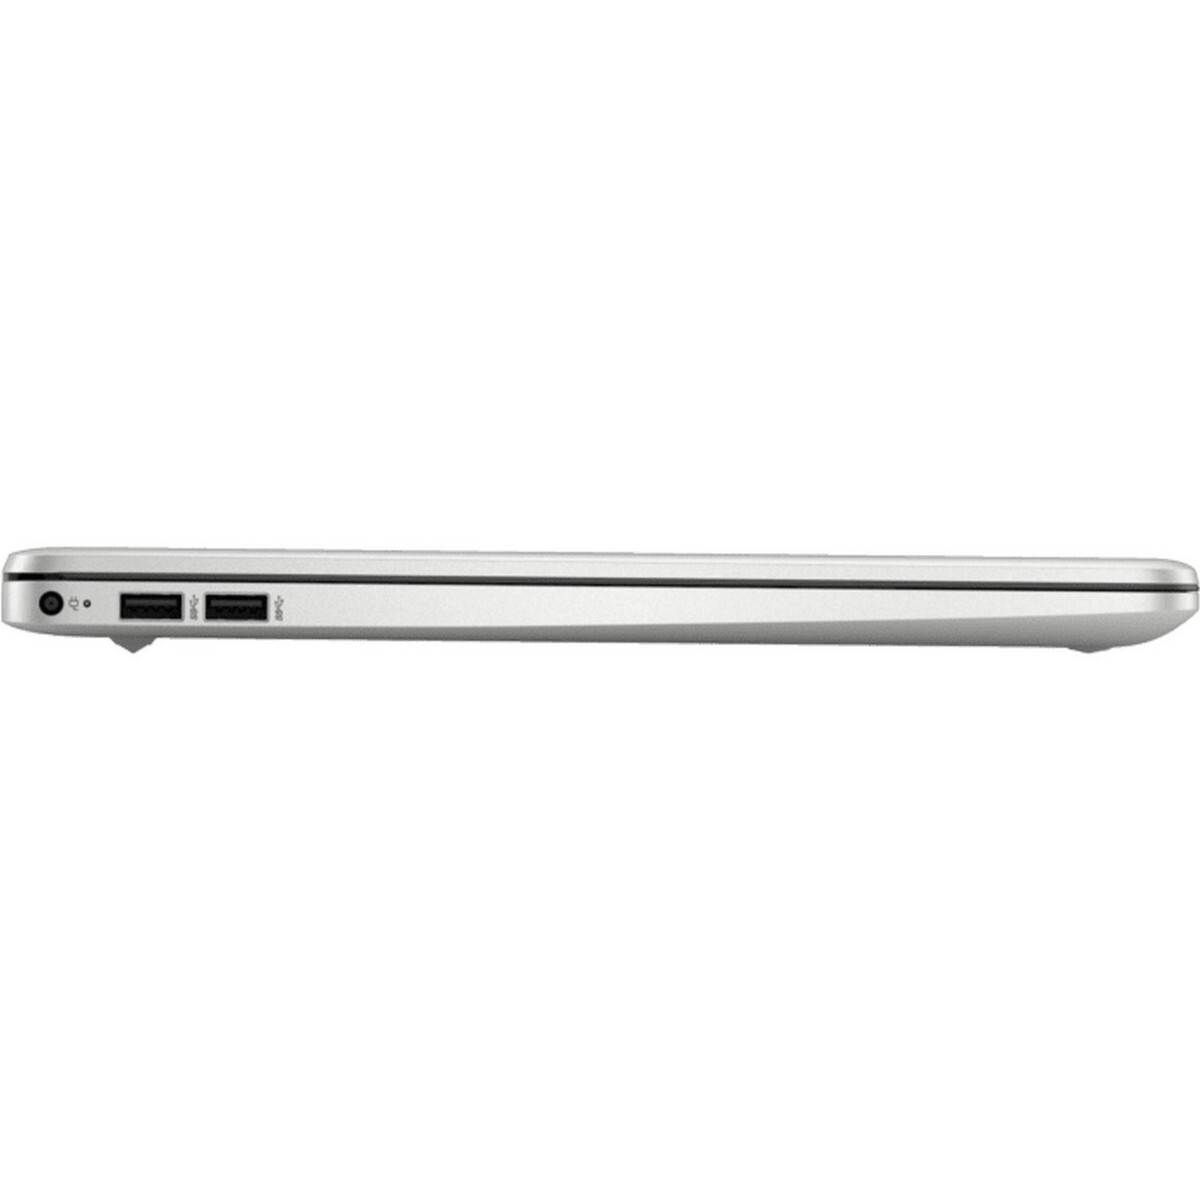 HP Core i5 12th Gen - (8 GB/512 GB SSD/Windows 11 Home) 15S-FQ5202TU Thin and Light Laptop